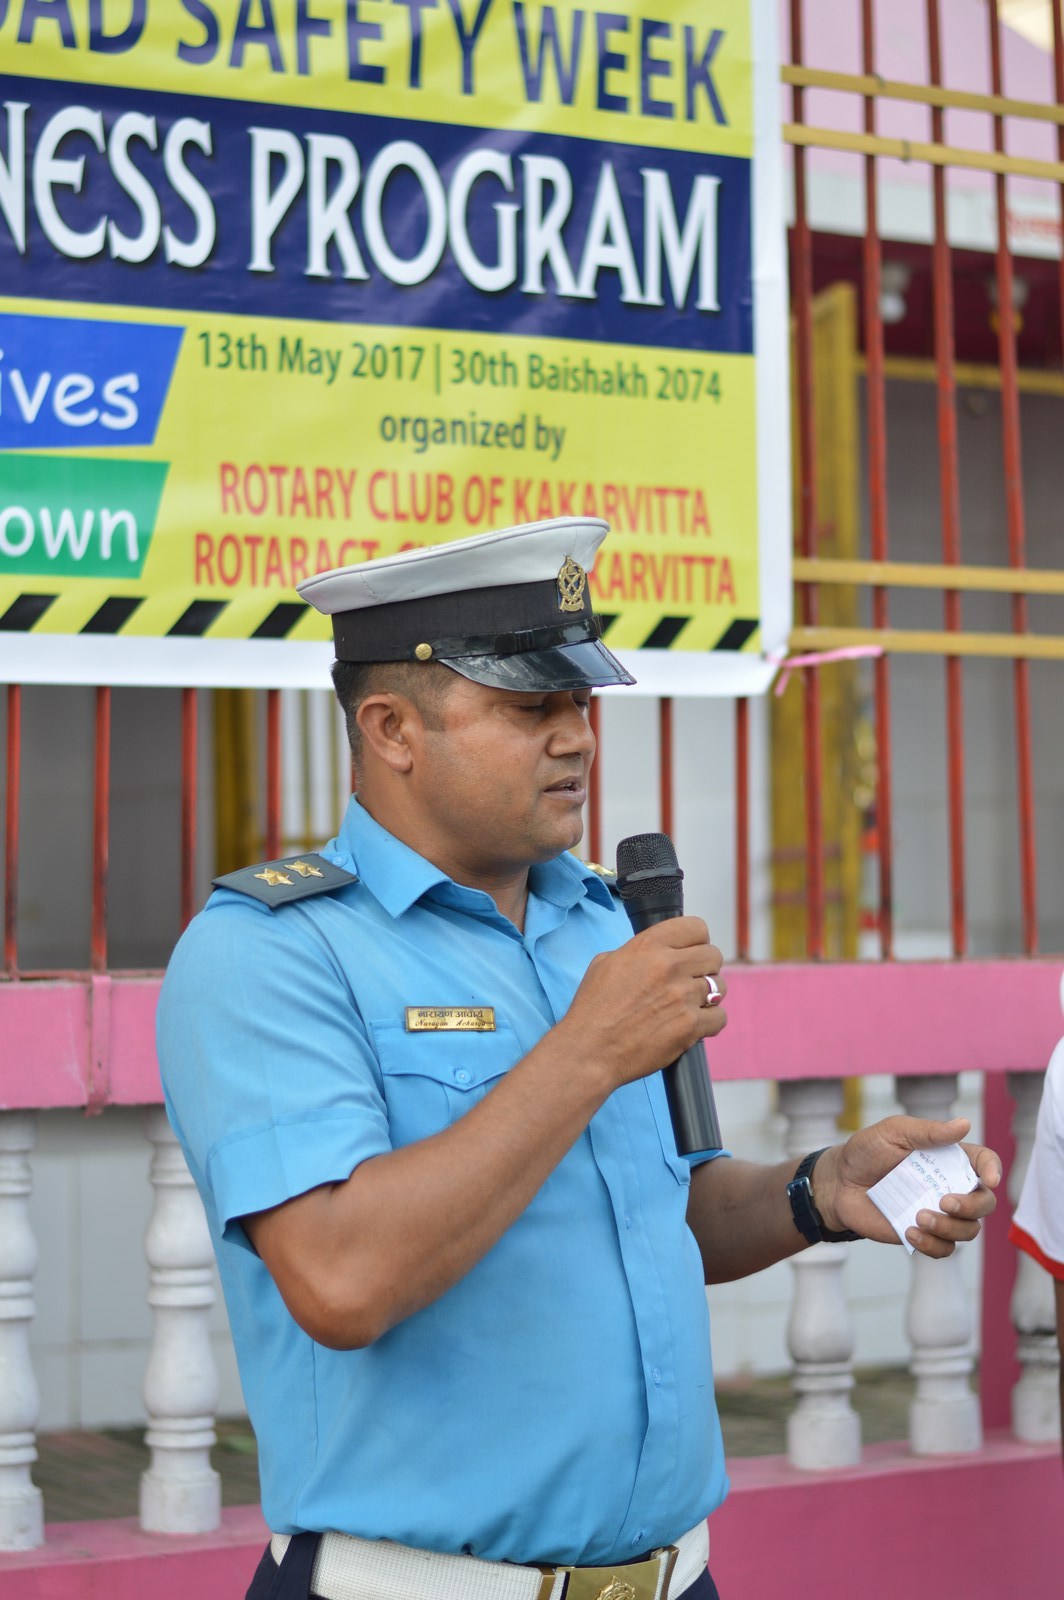 4th-UN-Global-Road-Safety-Week-2017-Traffic-Awareness-Program-Rotary-club-of-Kakarvitta-18